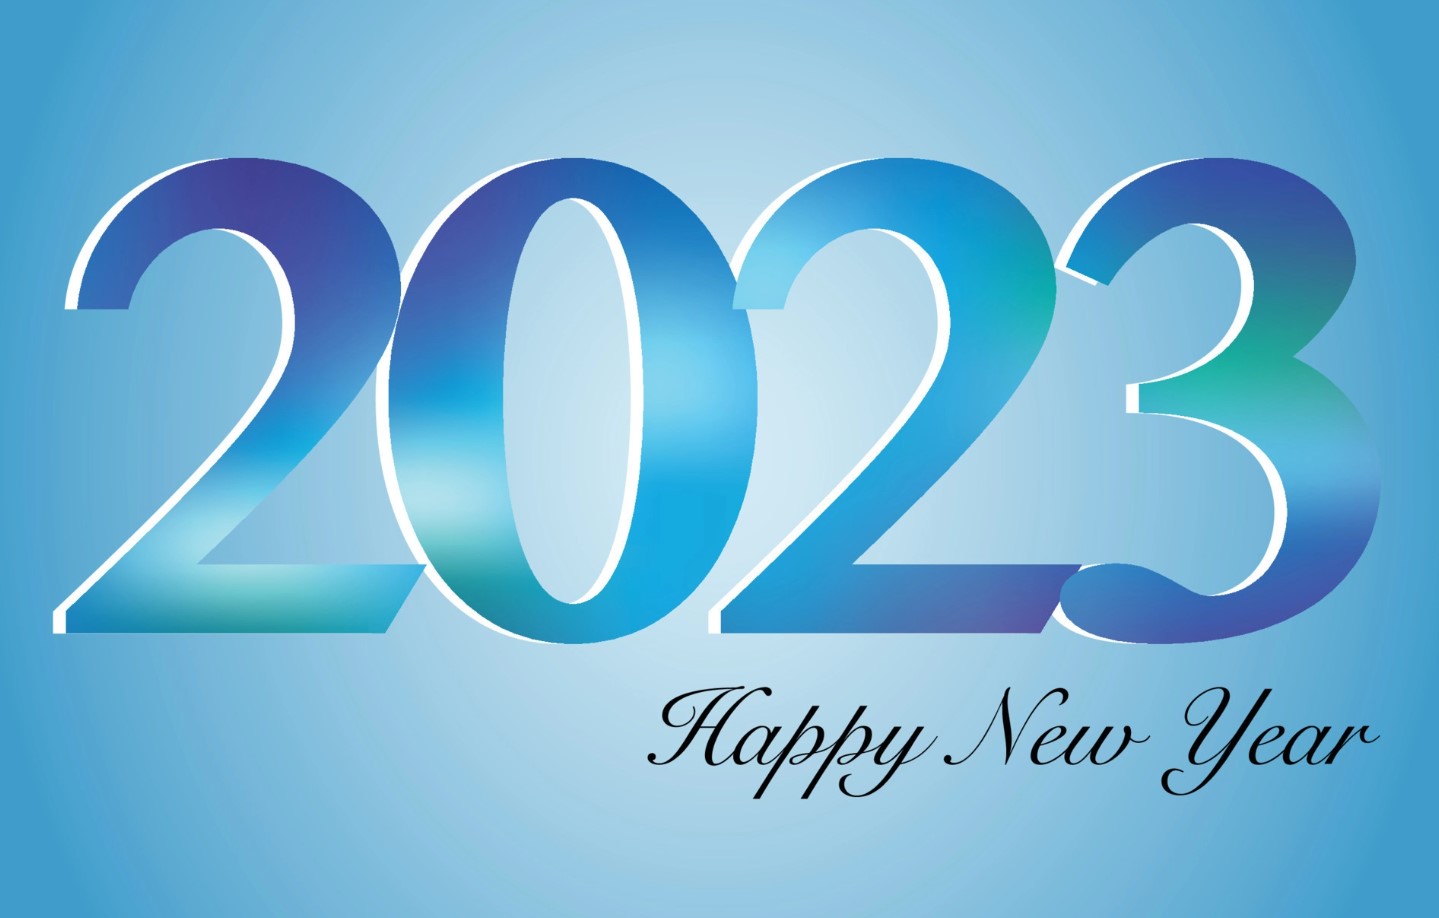 Happy New Year 2023 2 1